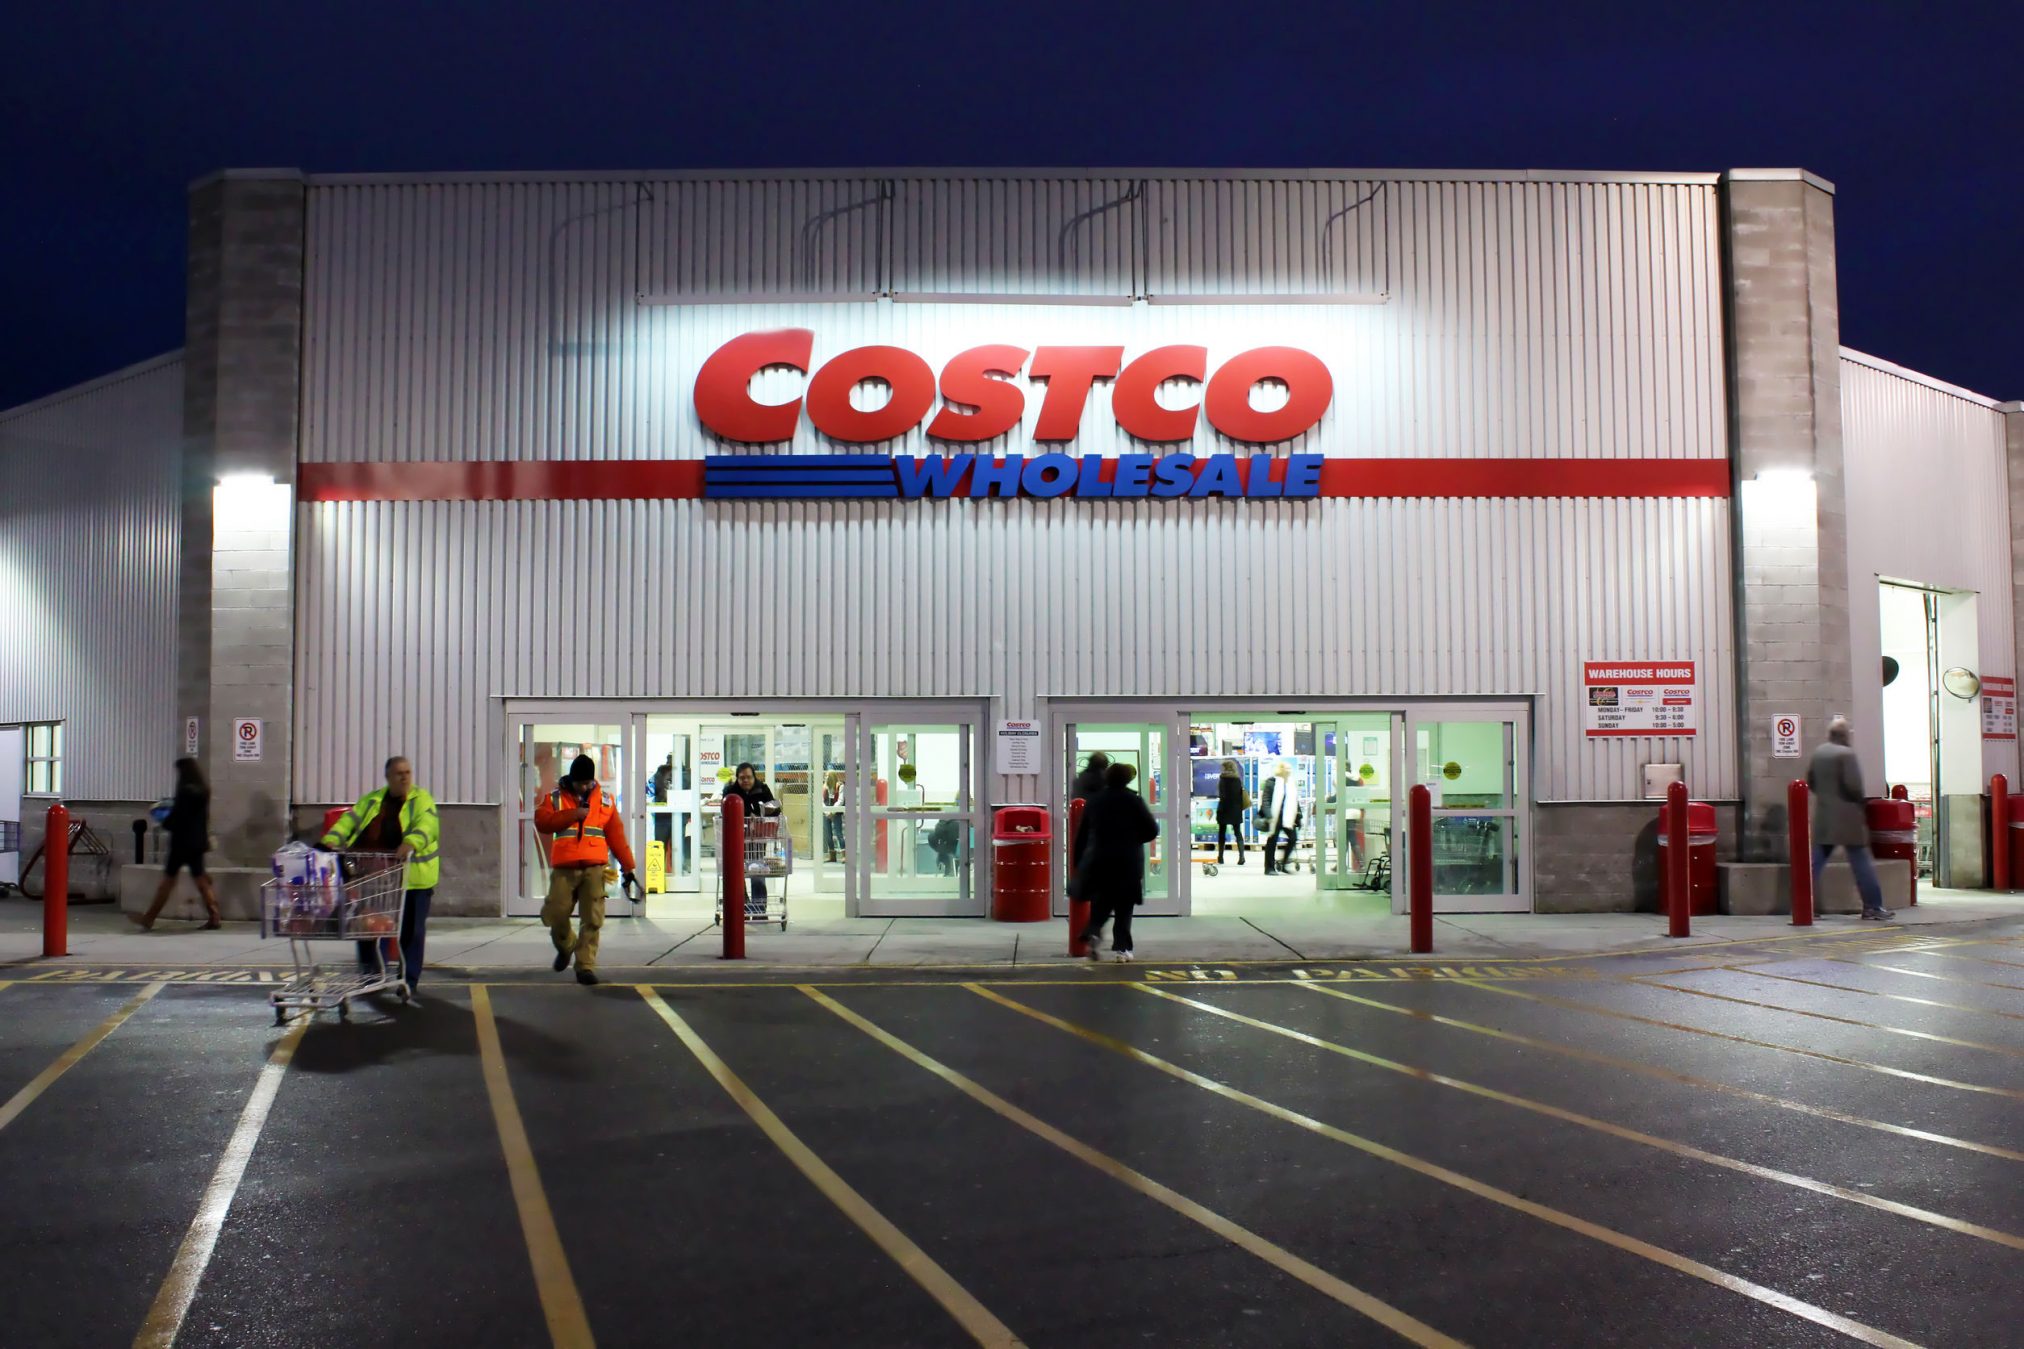 costco storefront lit at dusk